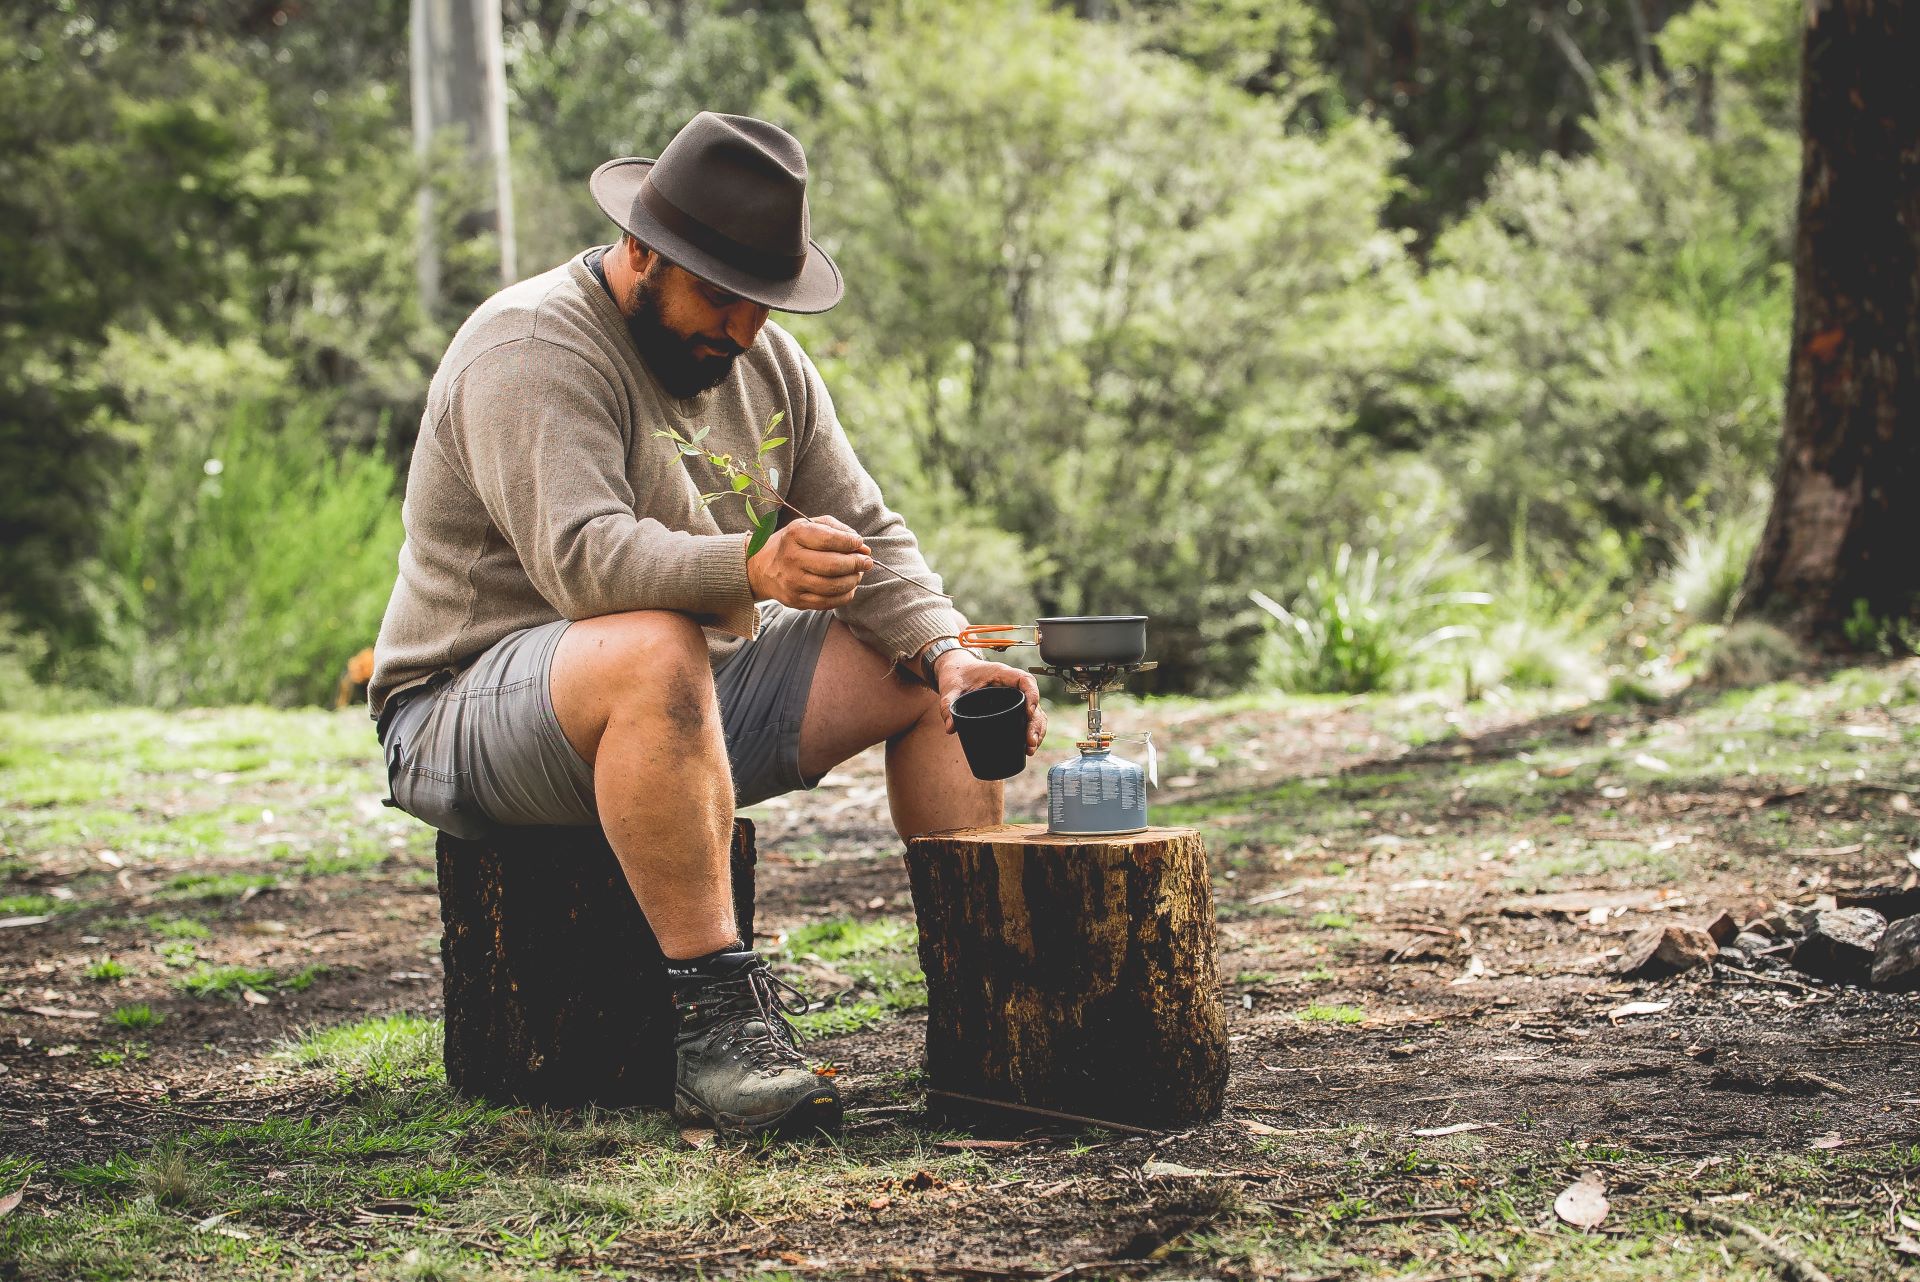 Camper sitting in forest using a gas burner